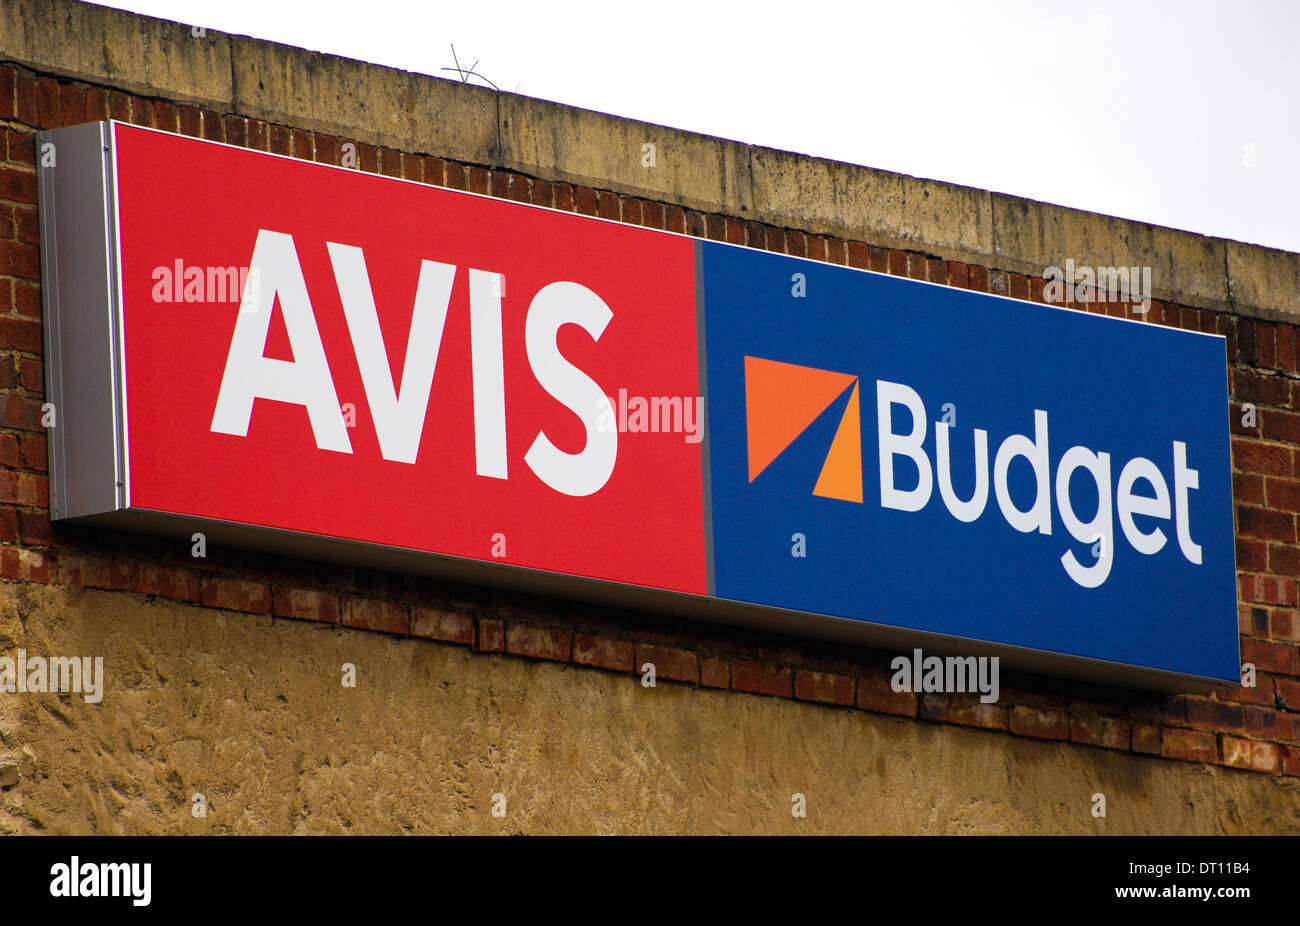 Avis Budget car hire sign Stock Photo